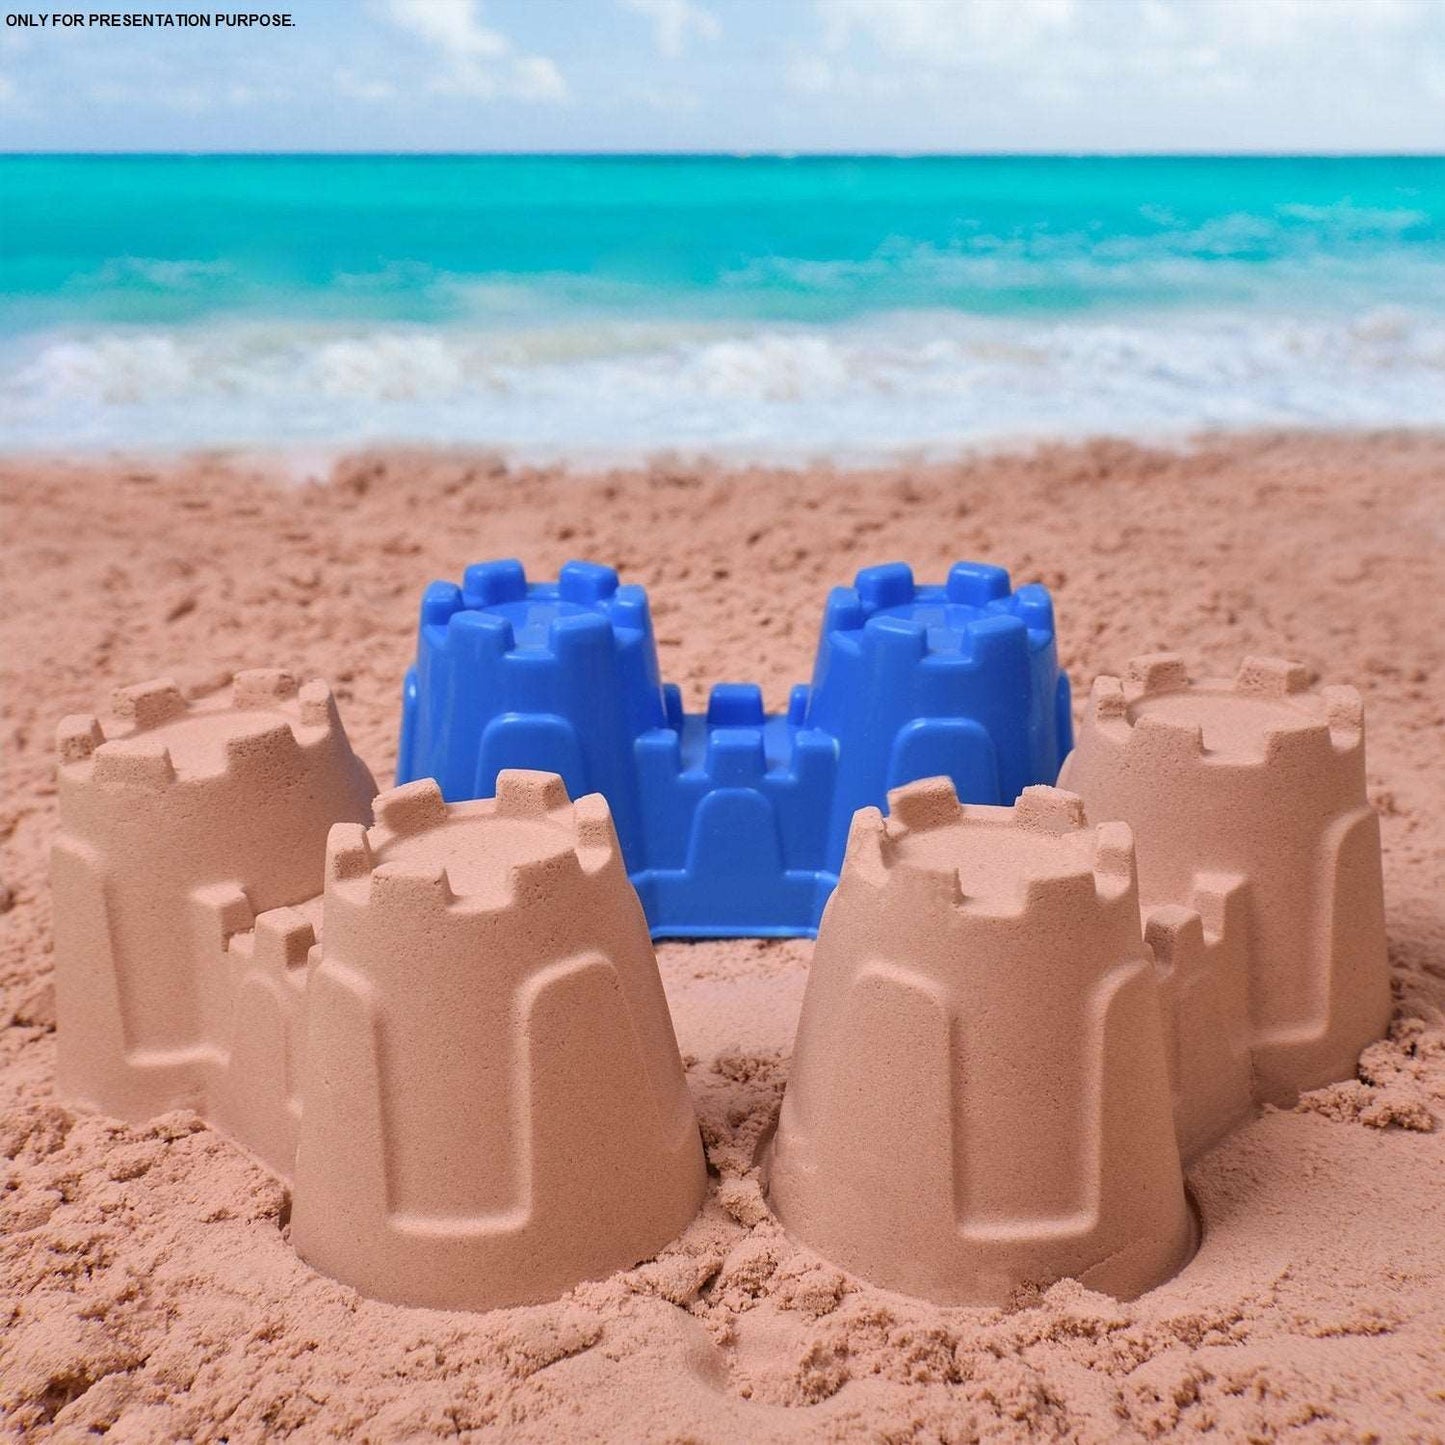 AZi TOYS Beach Sand Bucket Toy Set for Kids  - 7 pcs